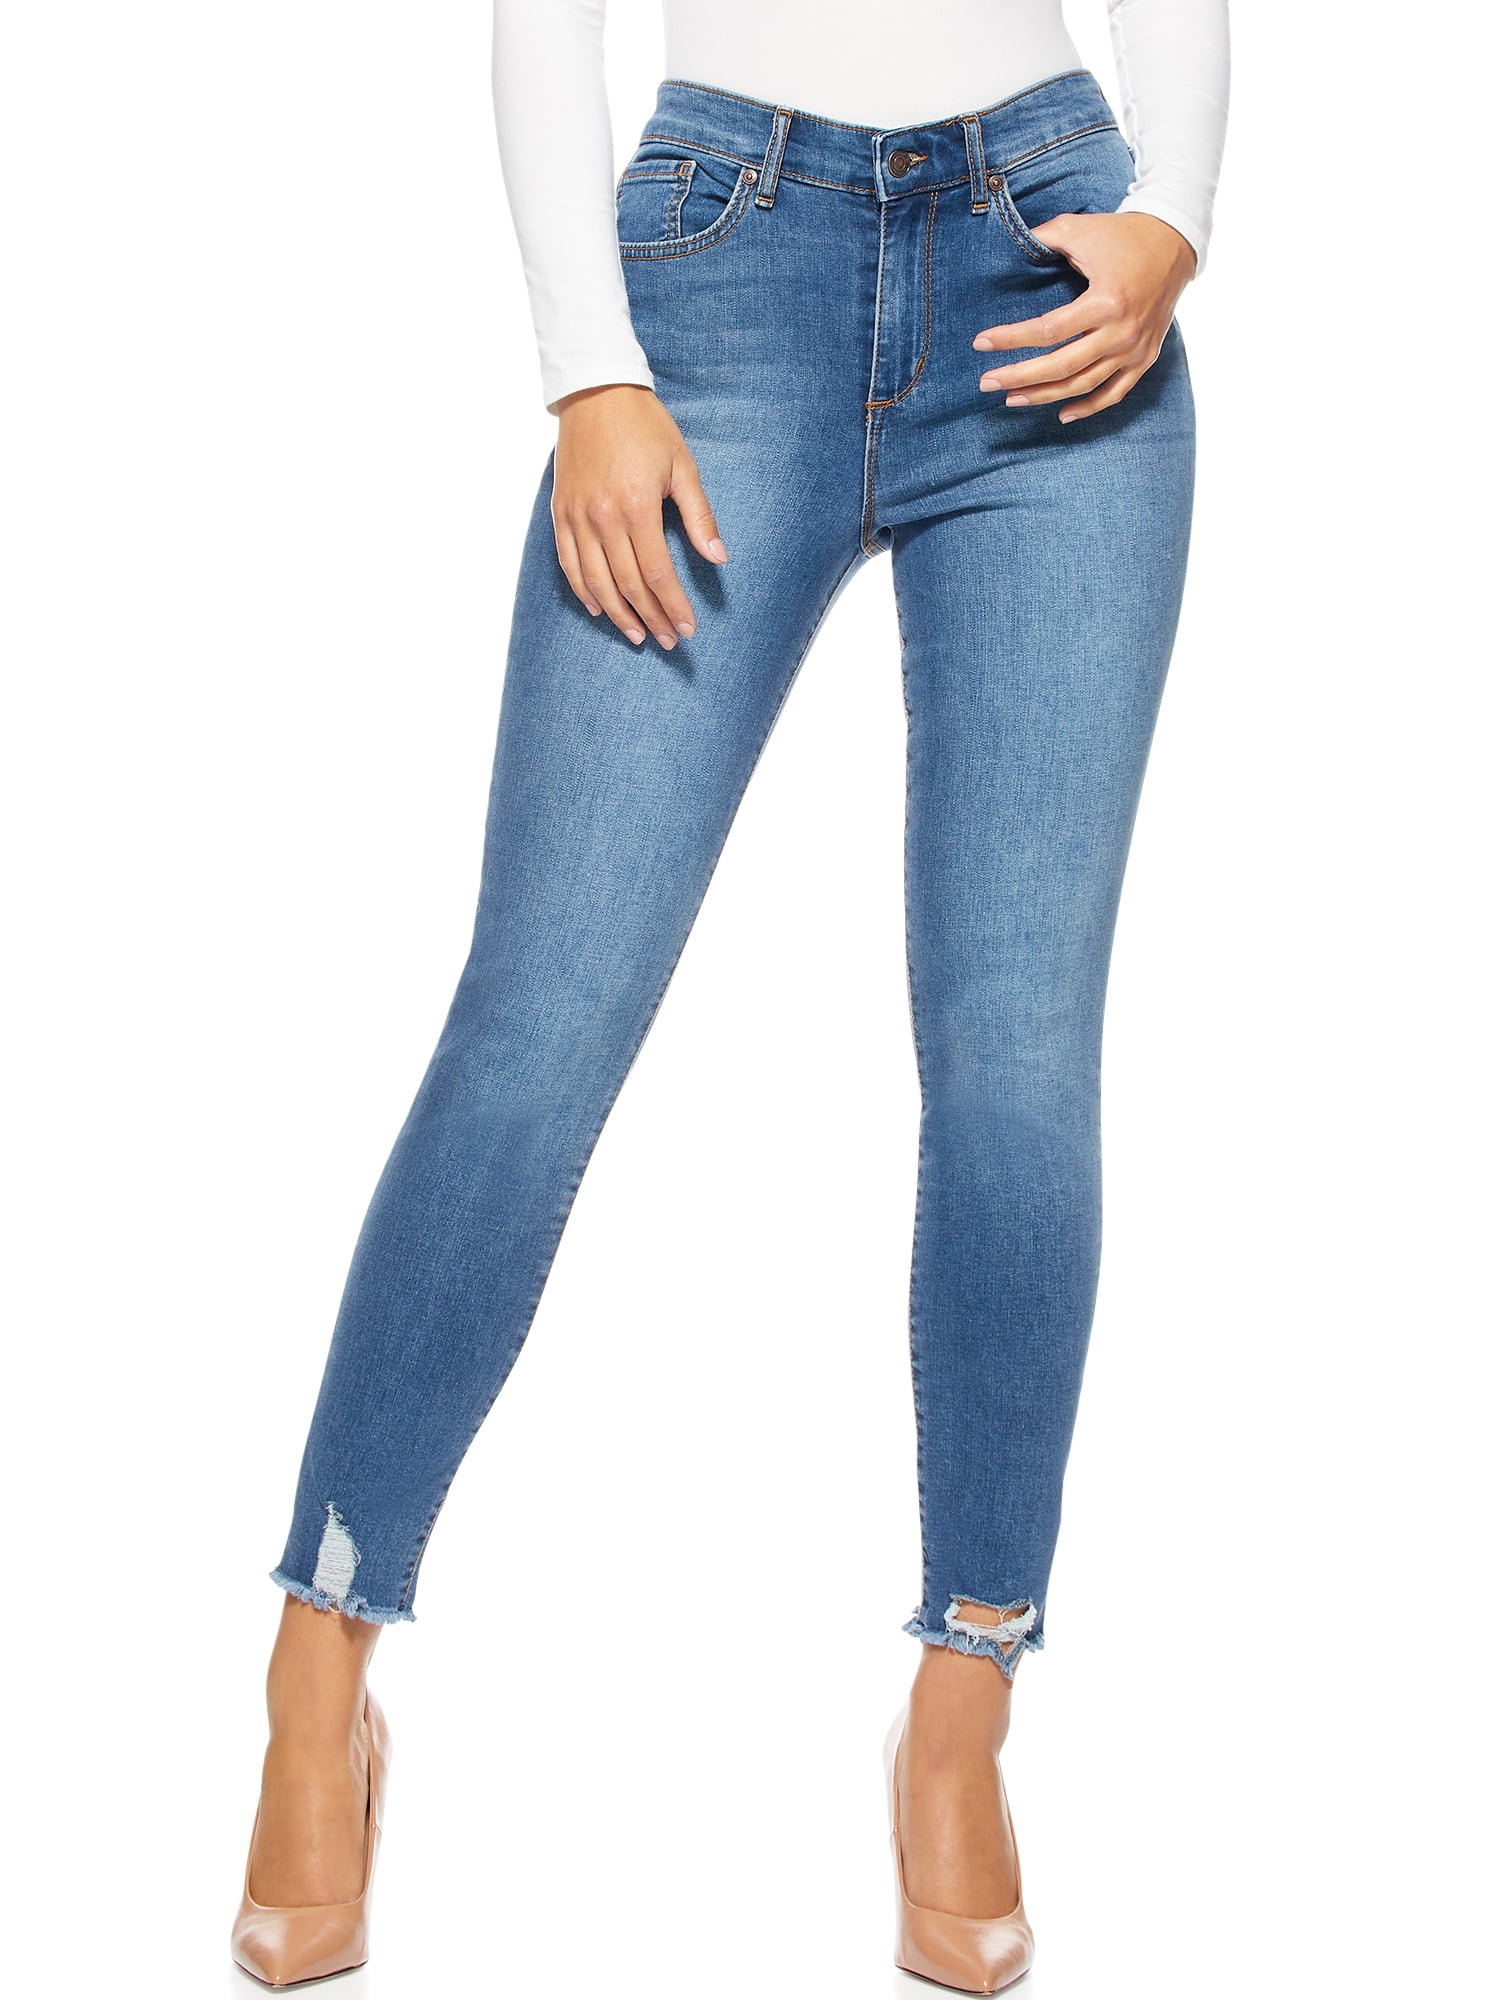 Sofia Vergara Jeans Super High Rise Skinny Size 14 Short NEW